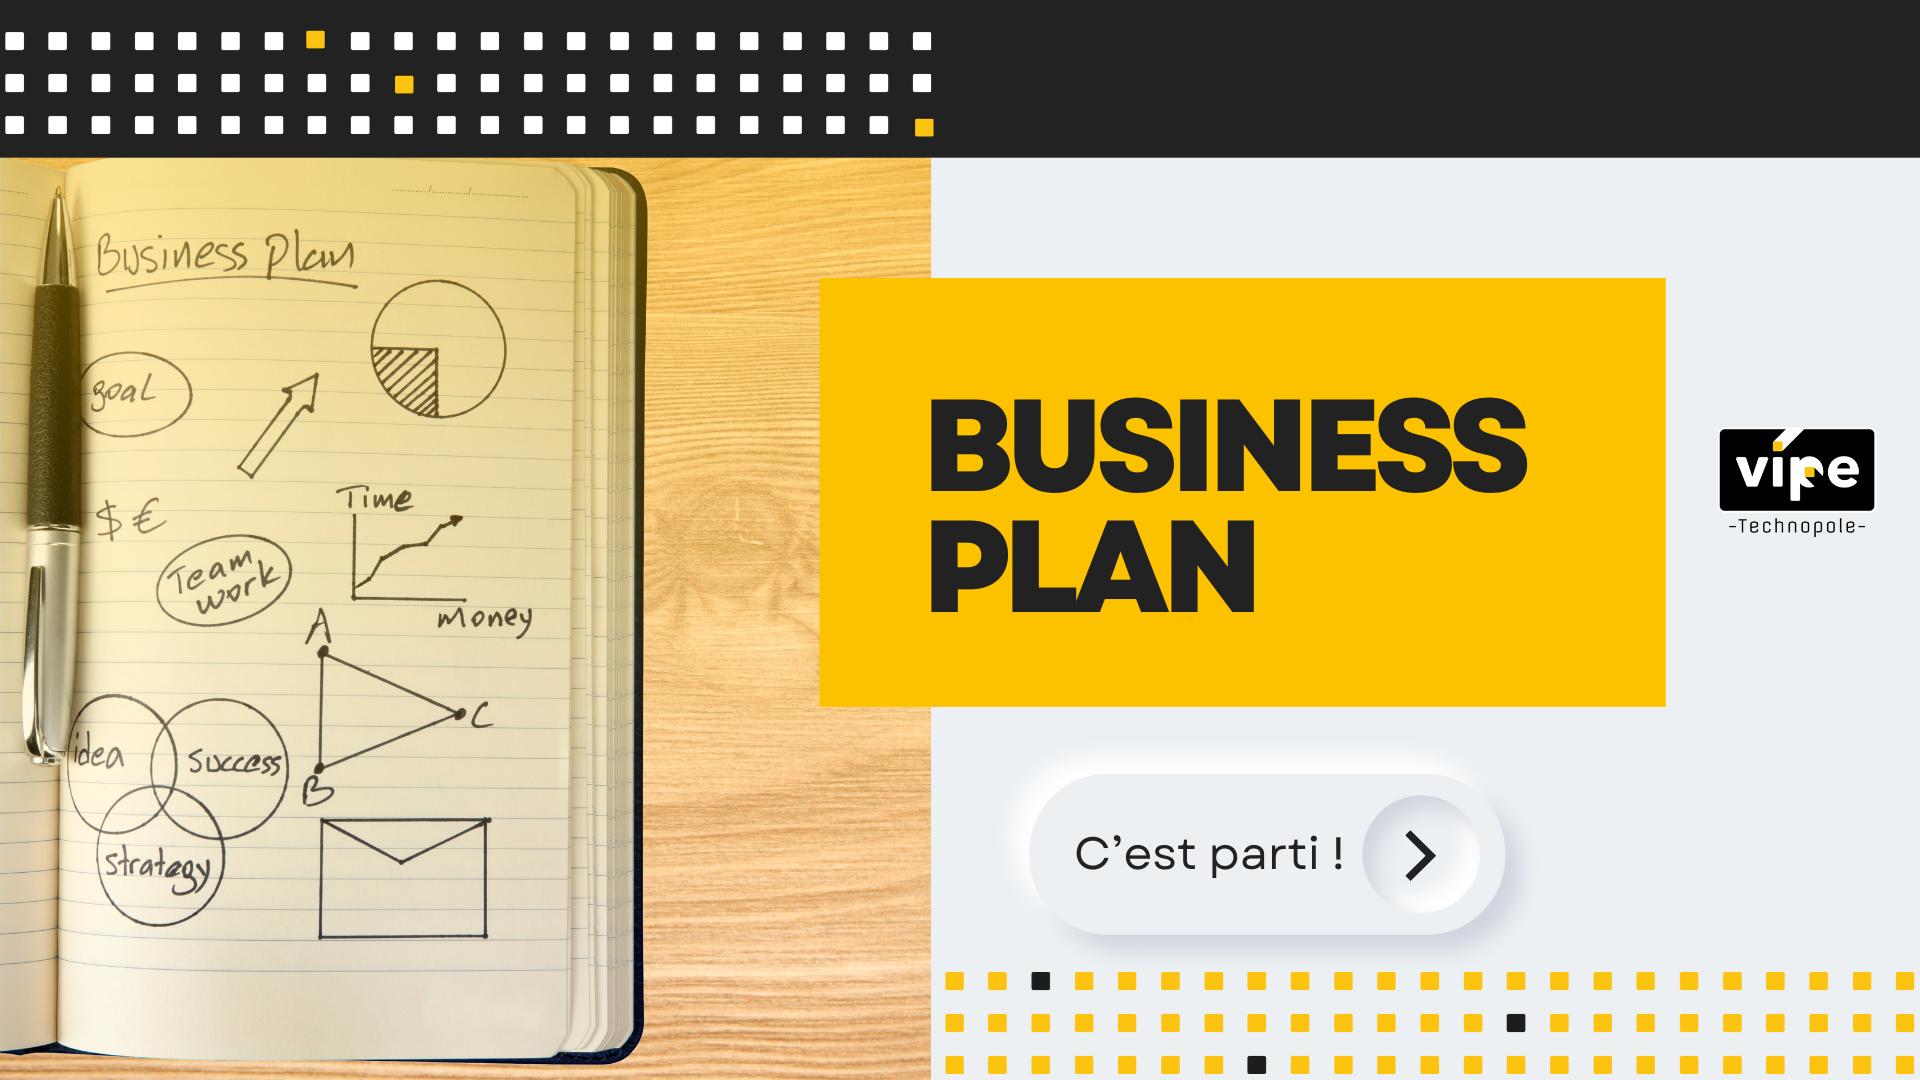 Business Plan Vipe2